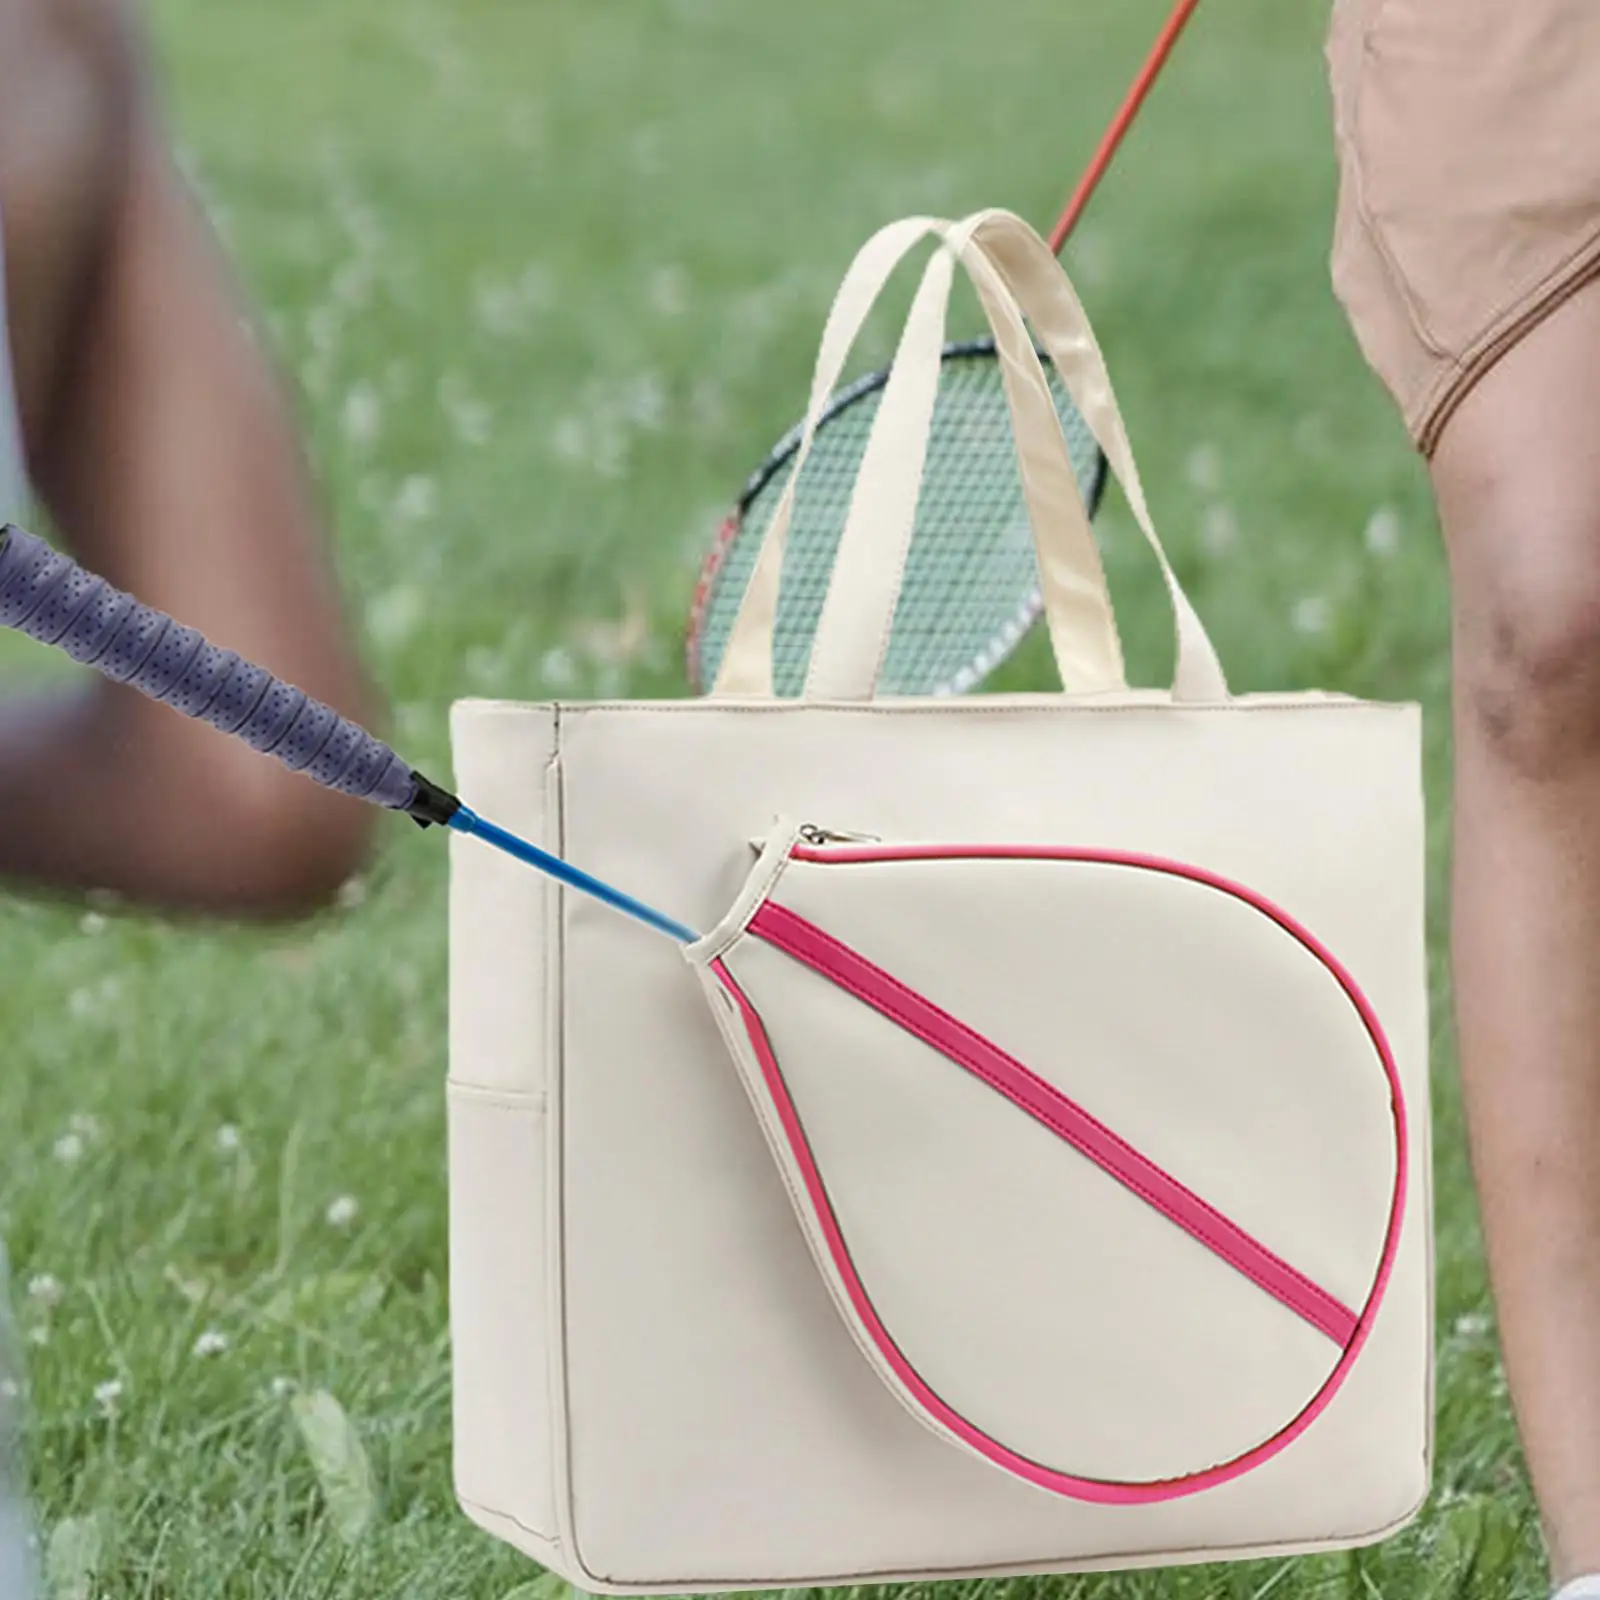 Tennis Shoulder Bag Water Resistant Handbag Tote for Tennis Racket Women